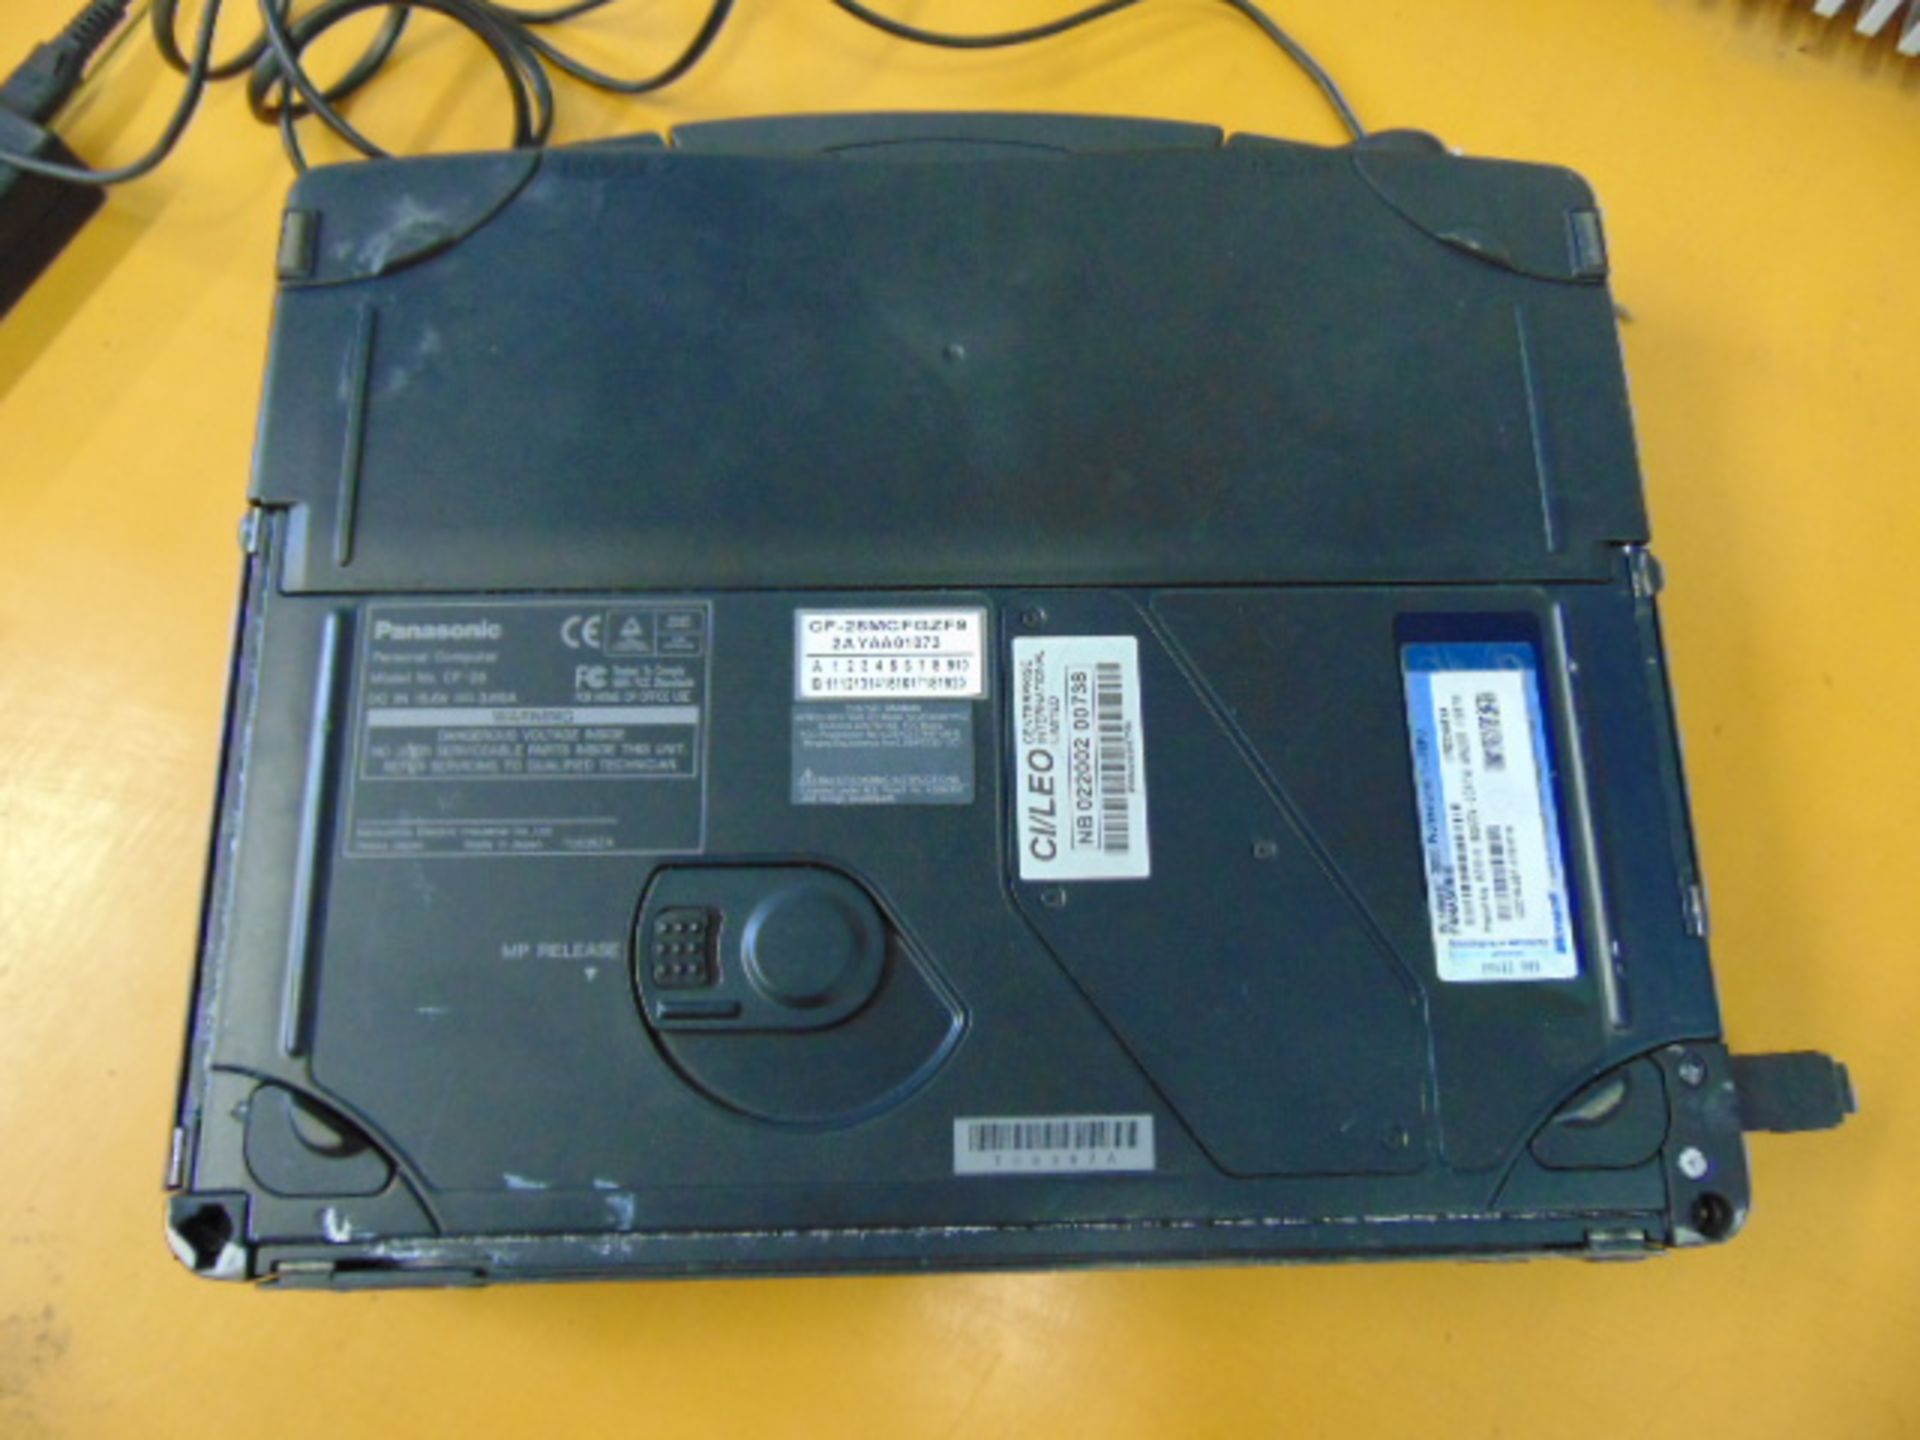 Panasonic CF-28 Toughbook Laptop - Image 11 of 15